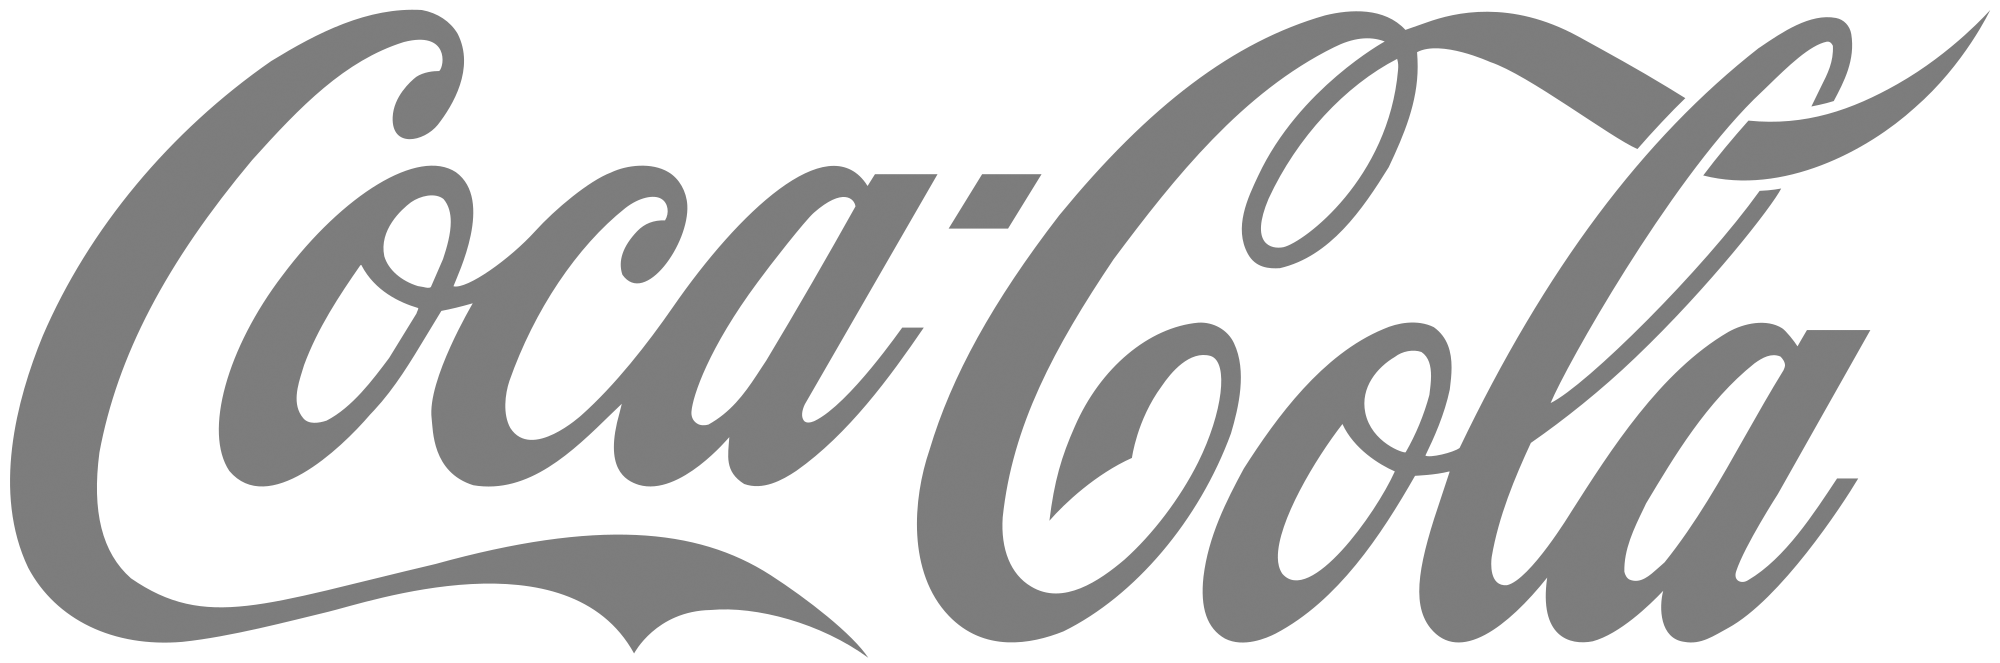 2000px-Coca-Cola_logo.svg.png